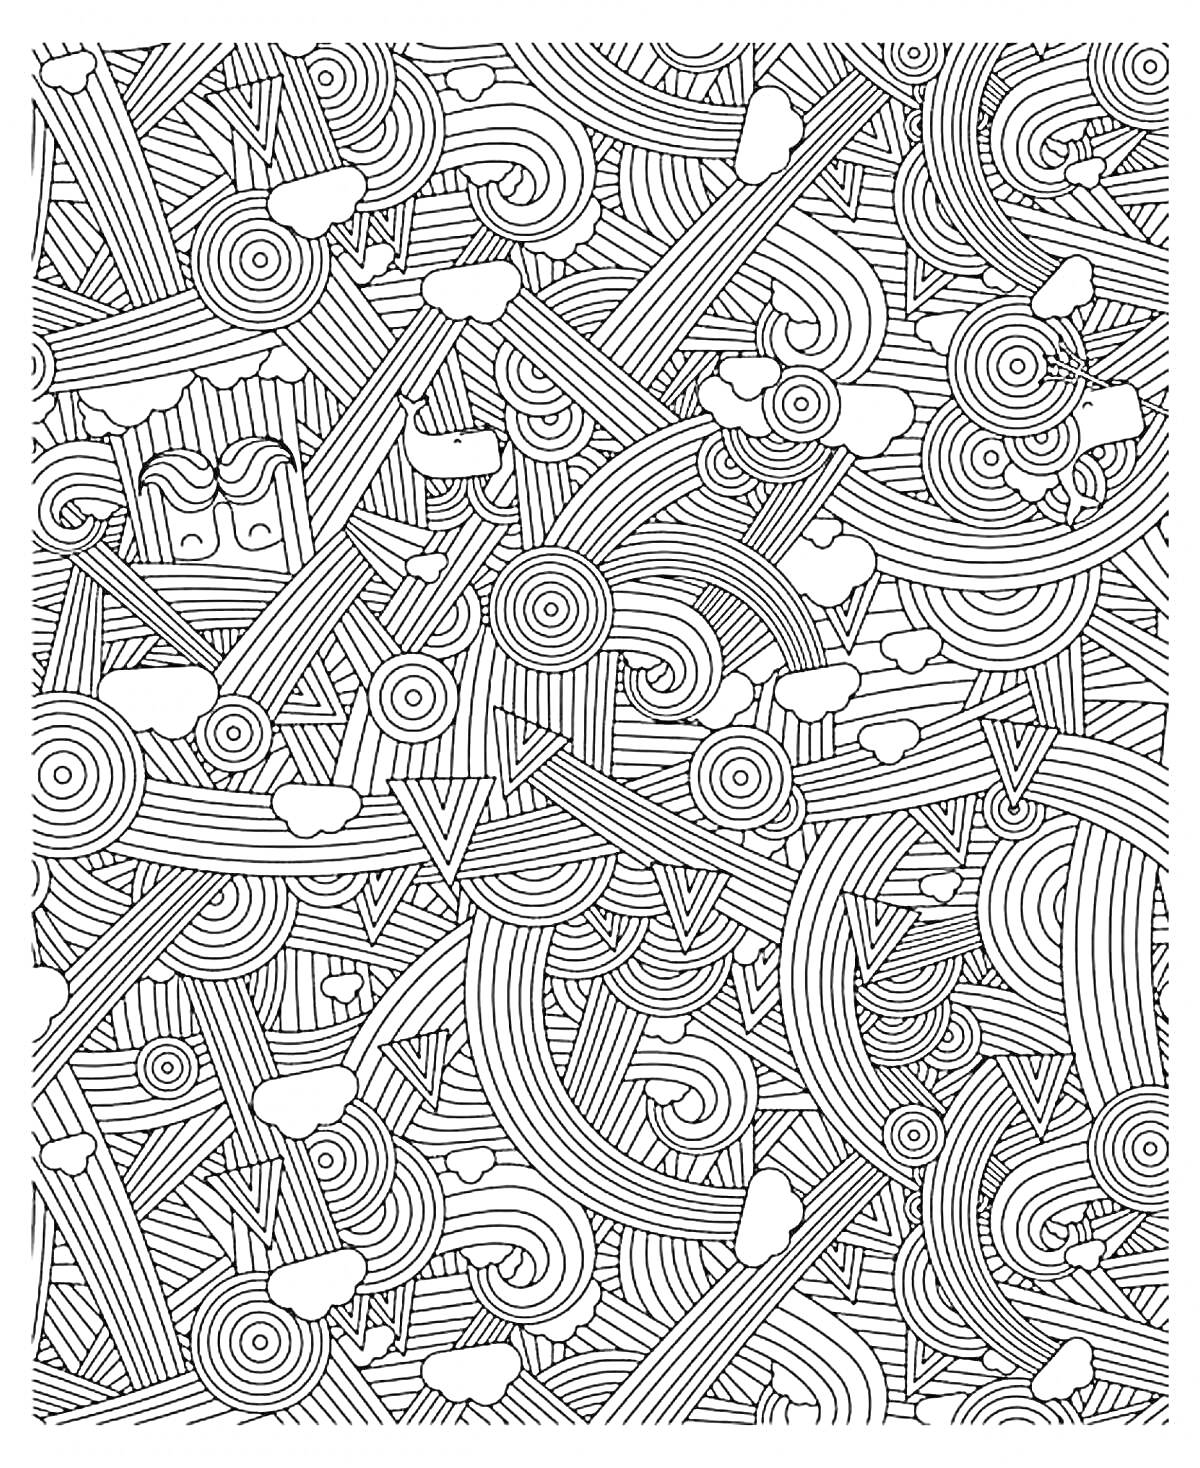 Раскраска Абстракция с триангуляцией, кругами, спиралями и облаками